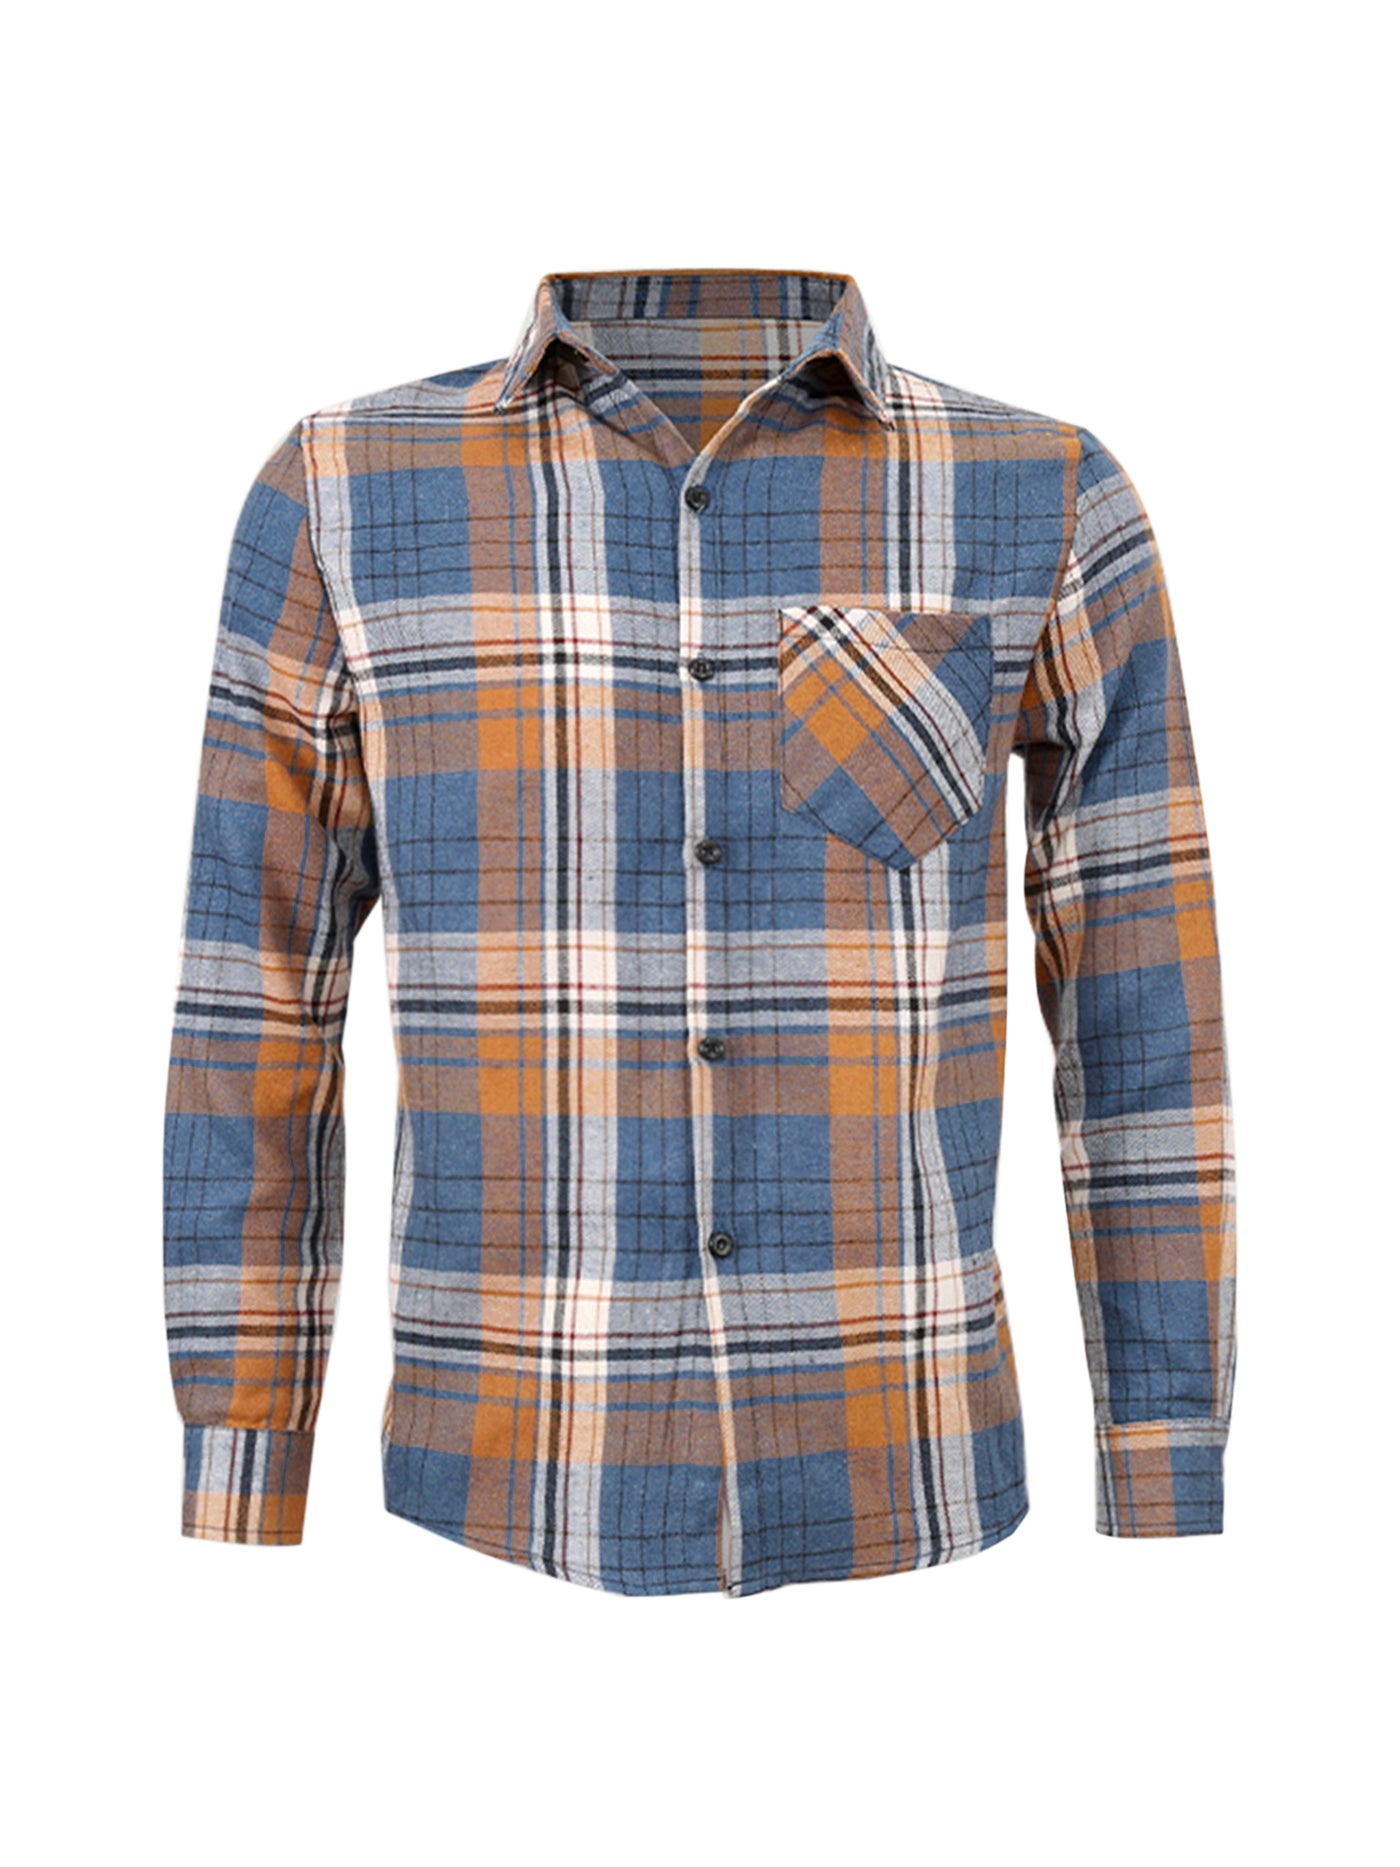 Bublédon Men's Casual Plaid Shirts Regular Fit Button Closure Long Sleeves Checked Shirt